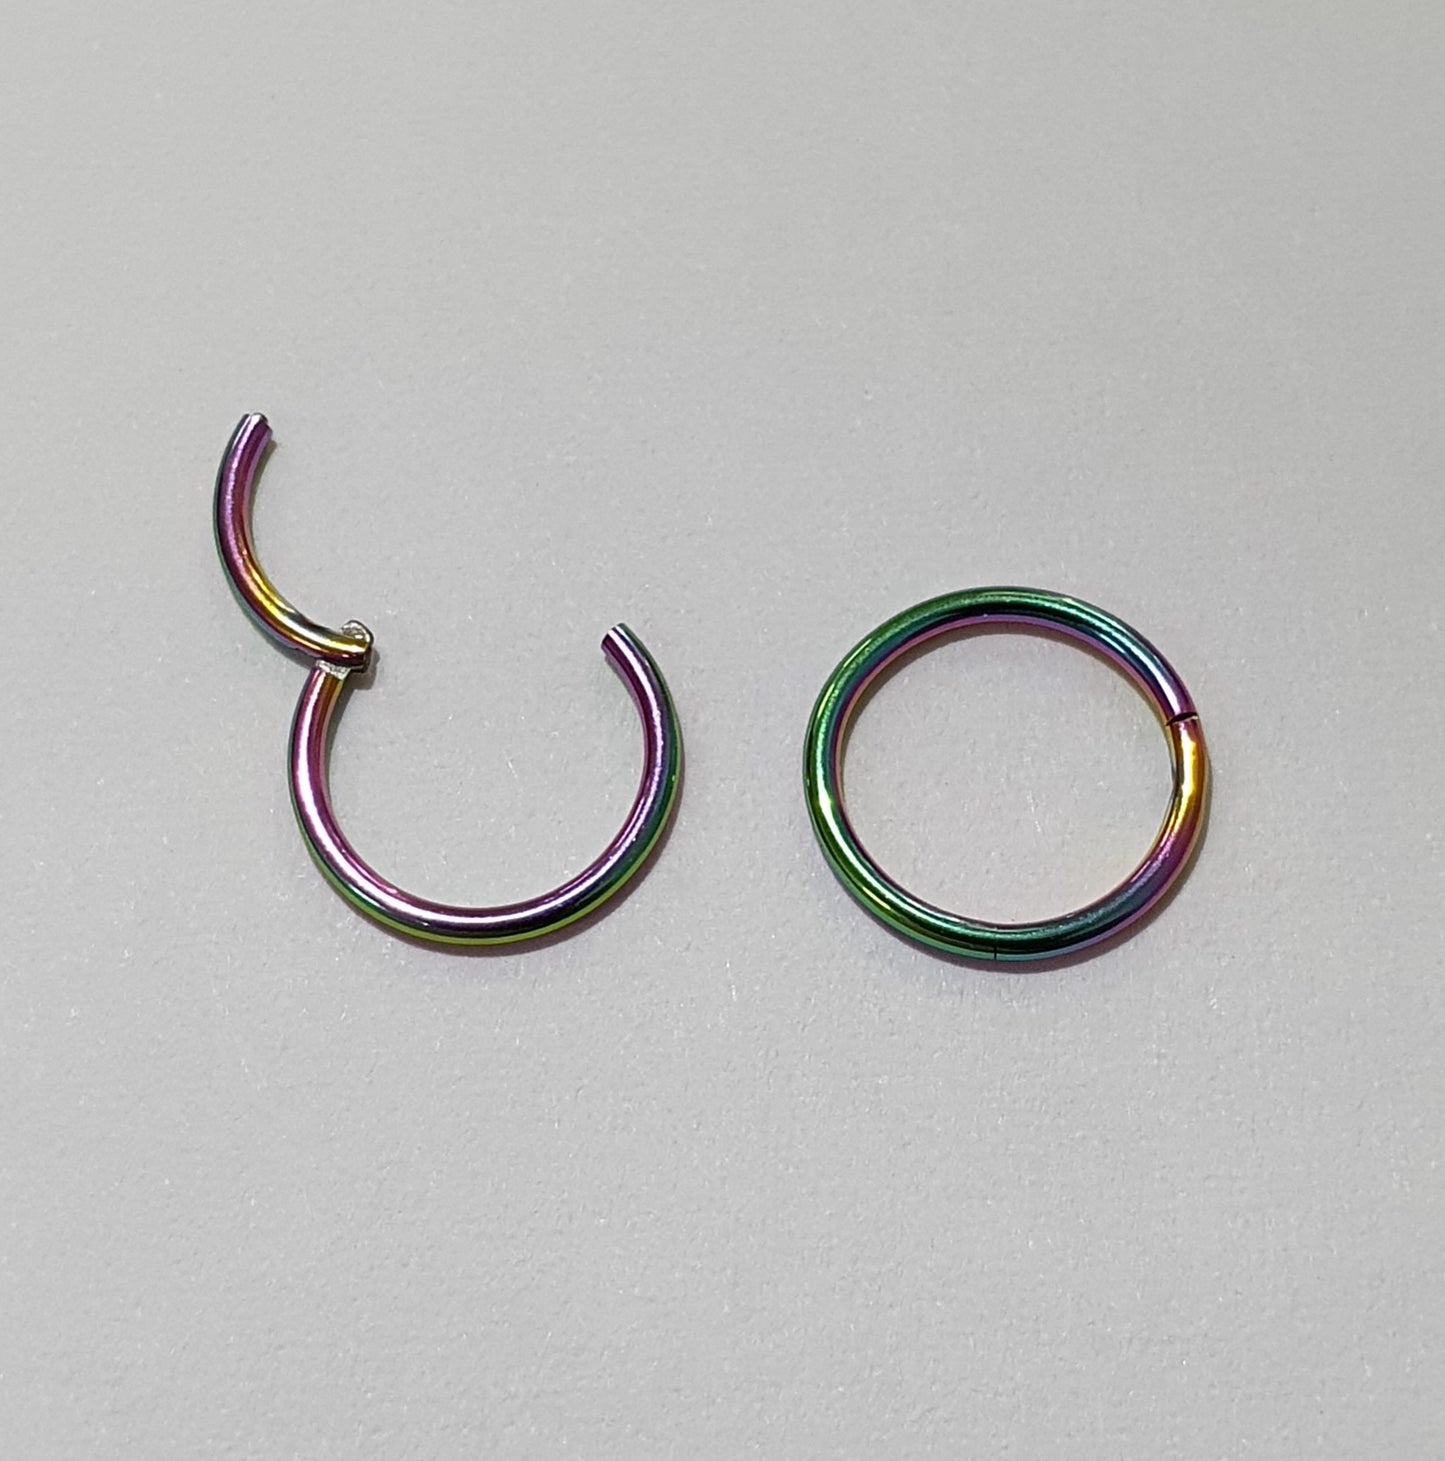 Hinged Segment Ring - 1mm(18g) Steel, Titanium, Rainbow, Black, Gold & Rose Gold